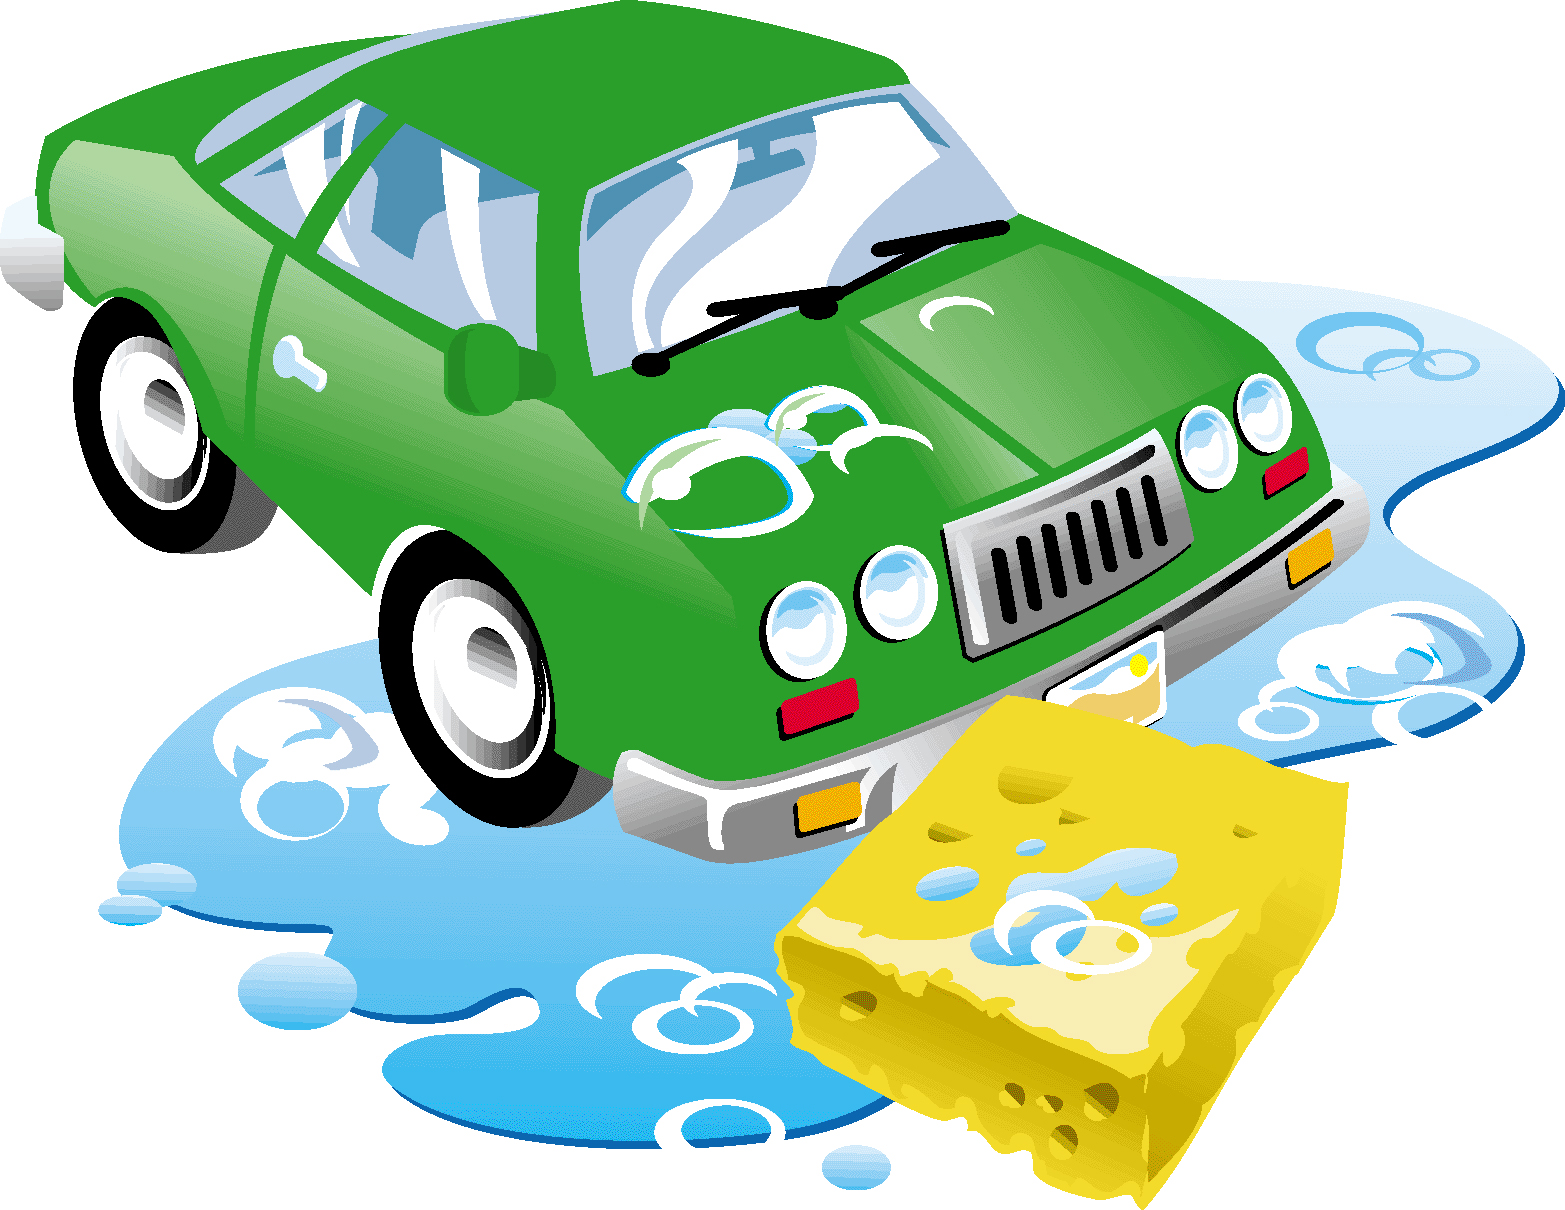 Car wash clipart png